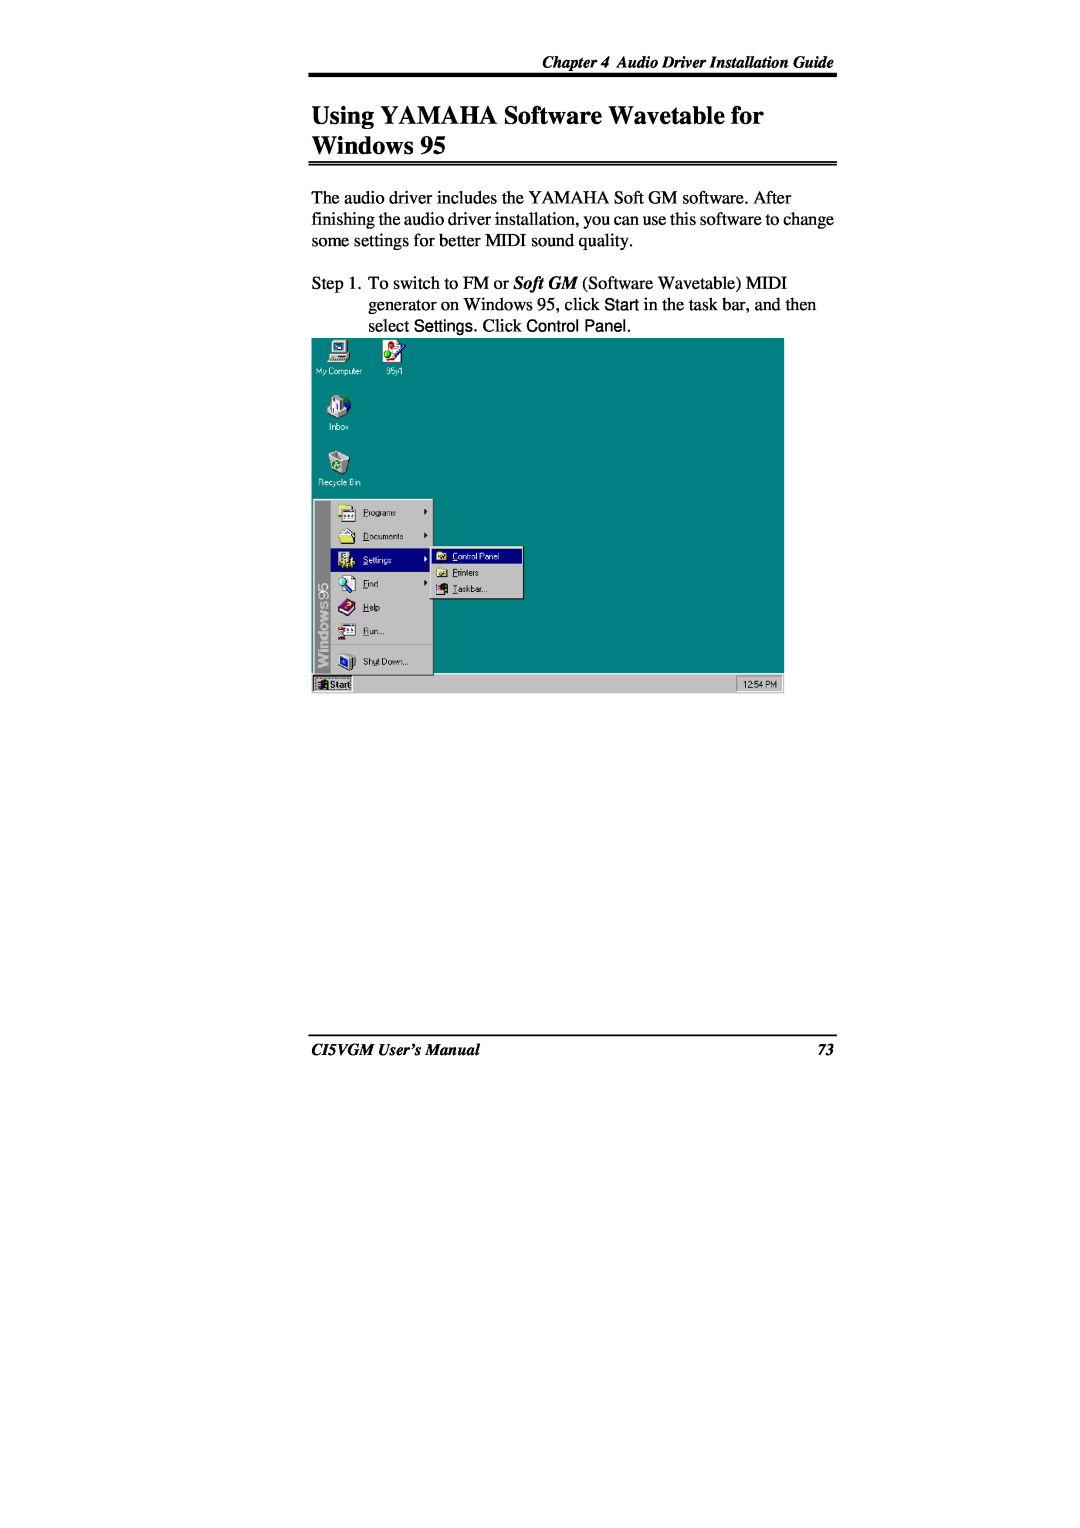 IBM CI5VGM Series user manual Using YAMAHA Software Wavetable for Windows 